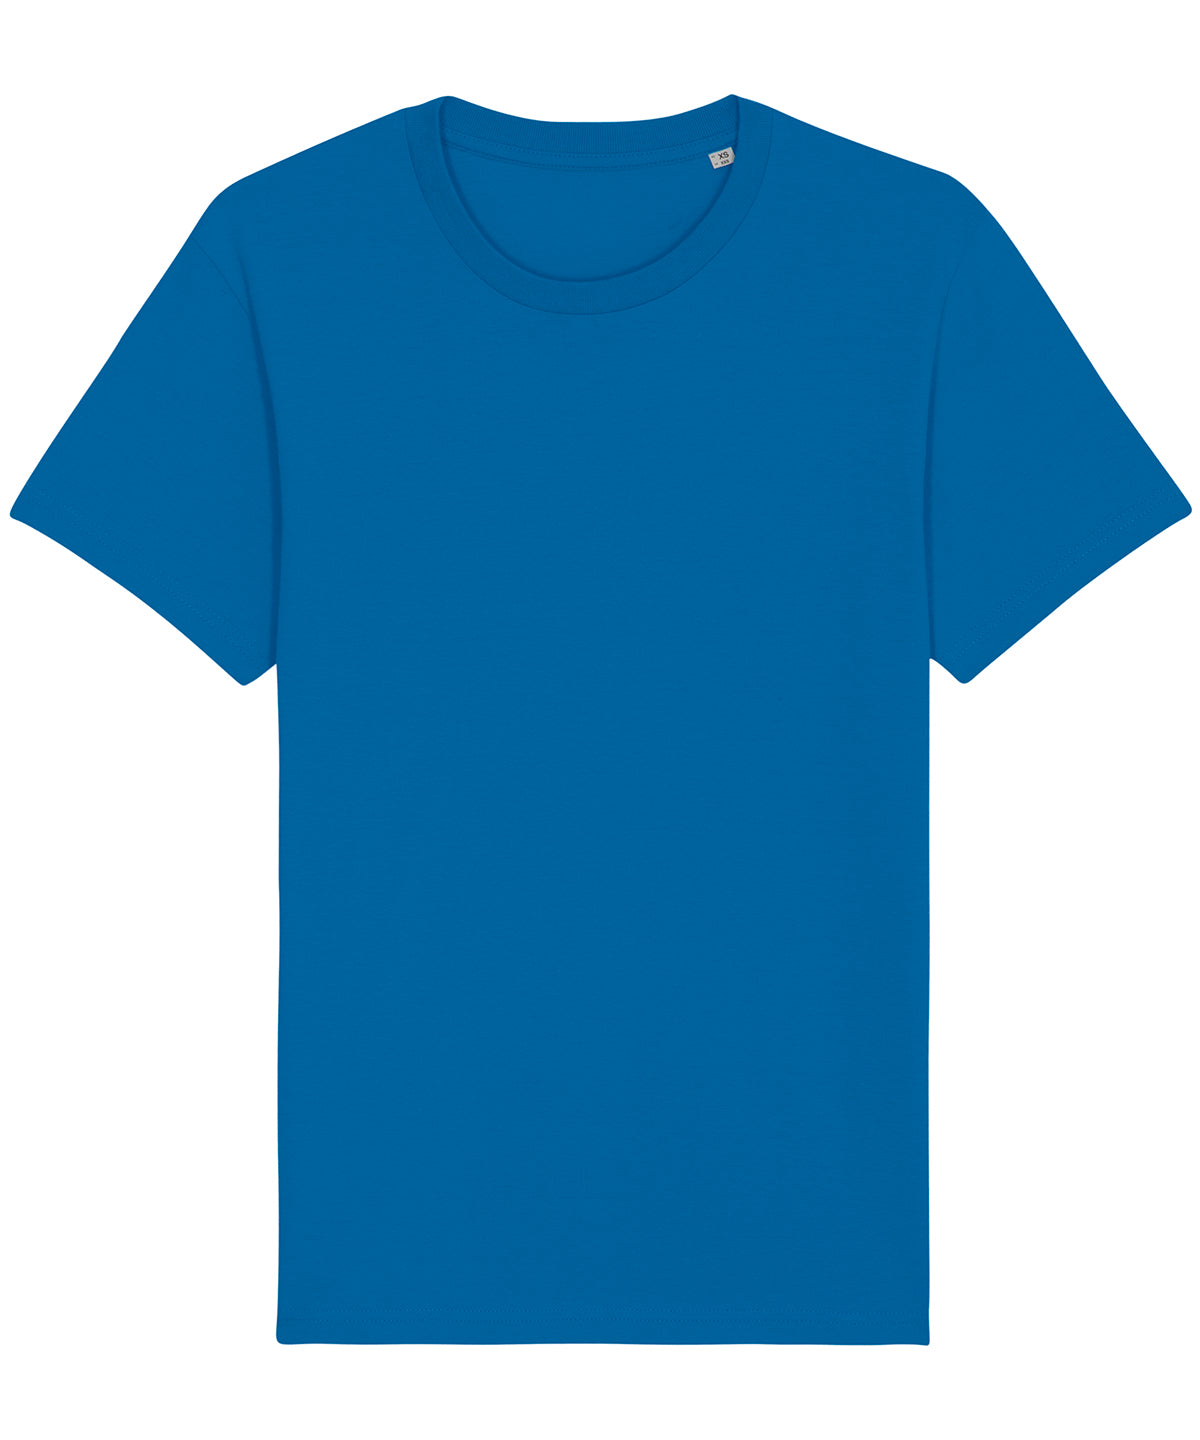 Stanley/Stella Rocker The Essential Unisex T-Shirt  Royal Blue